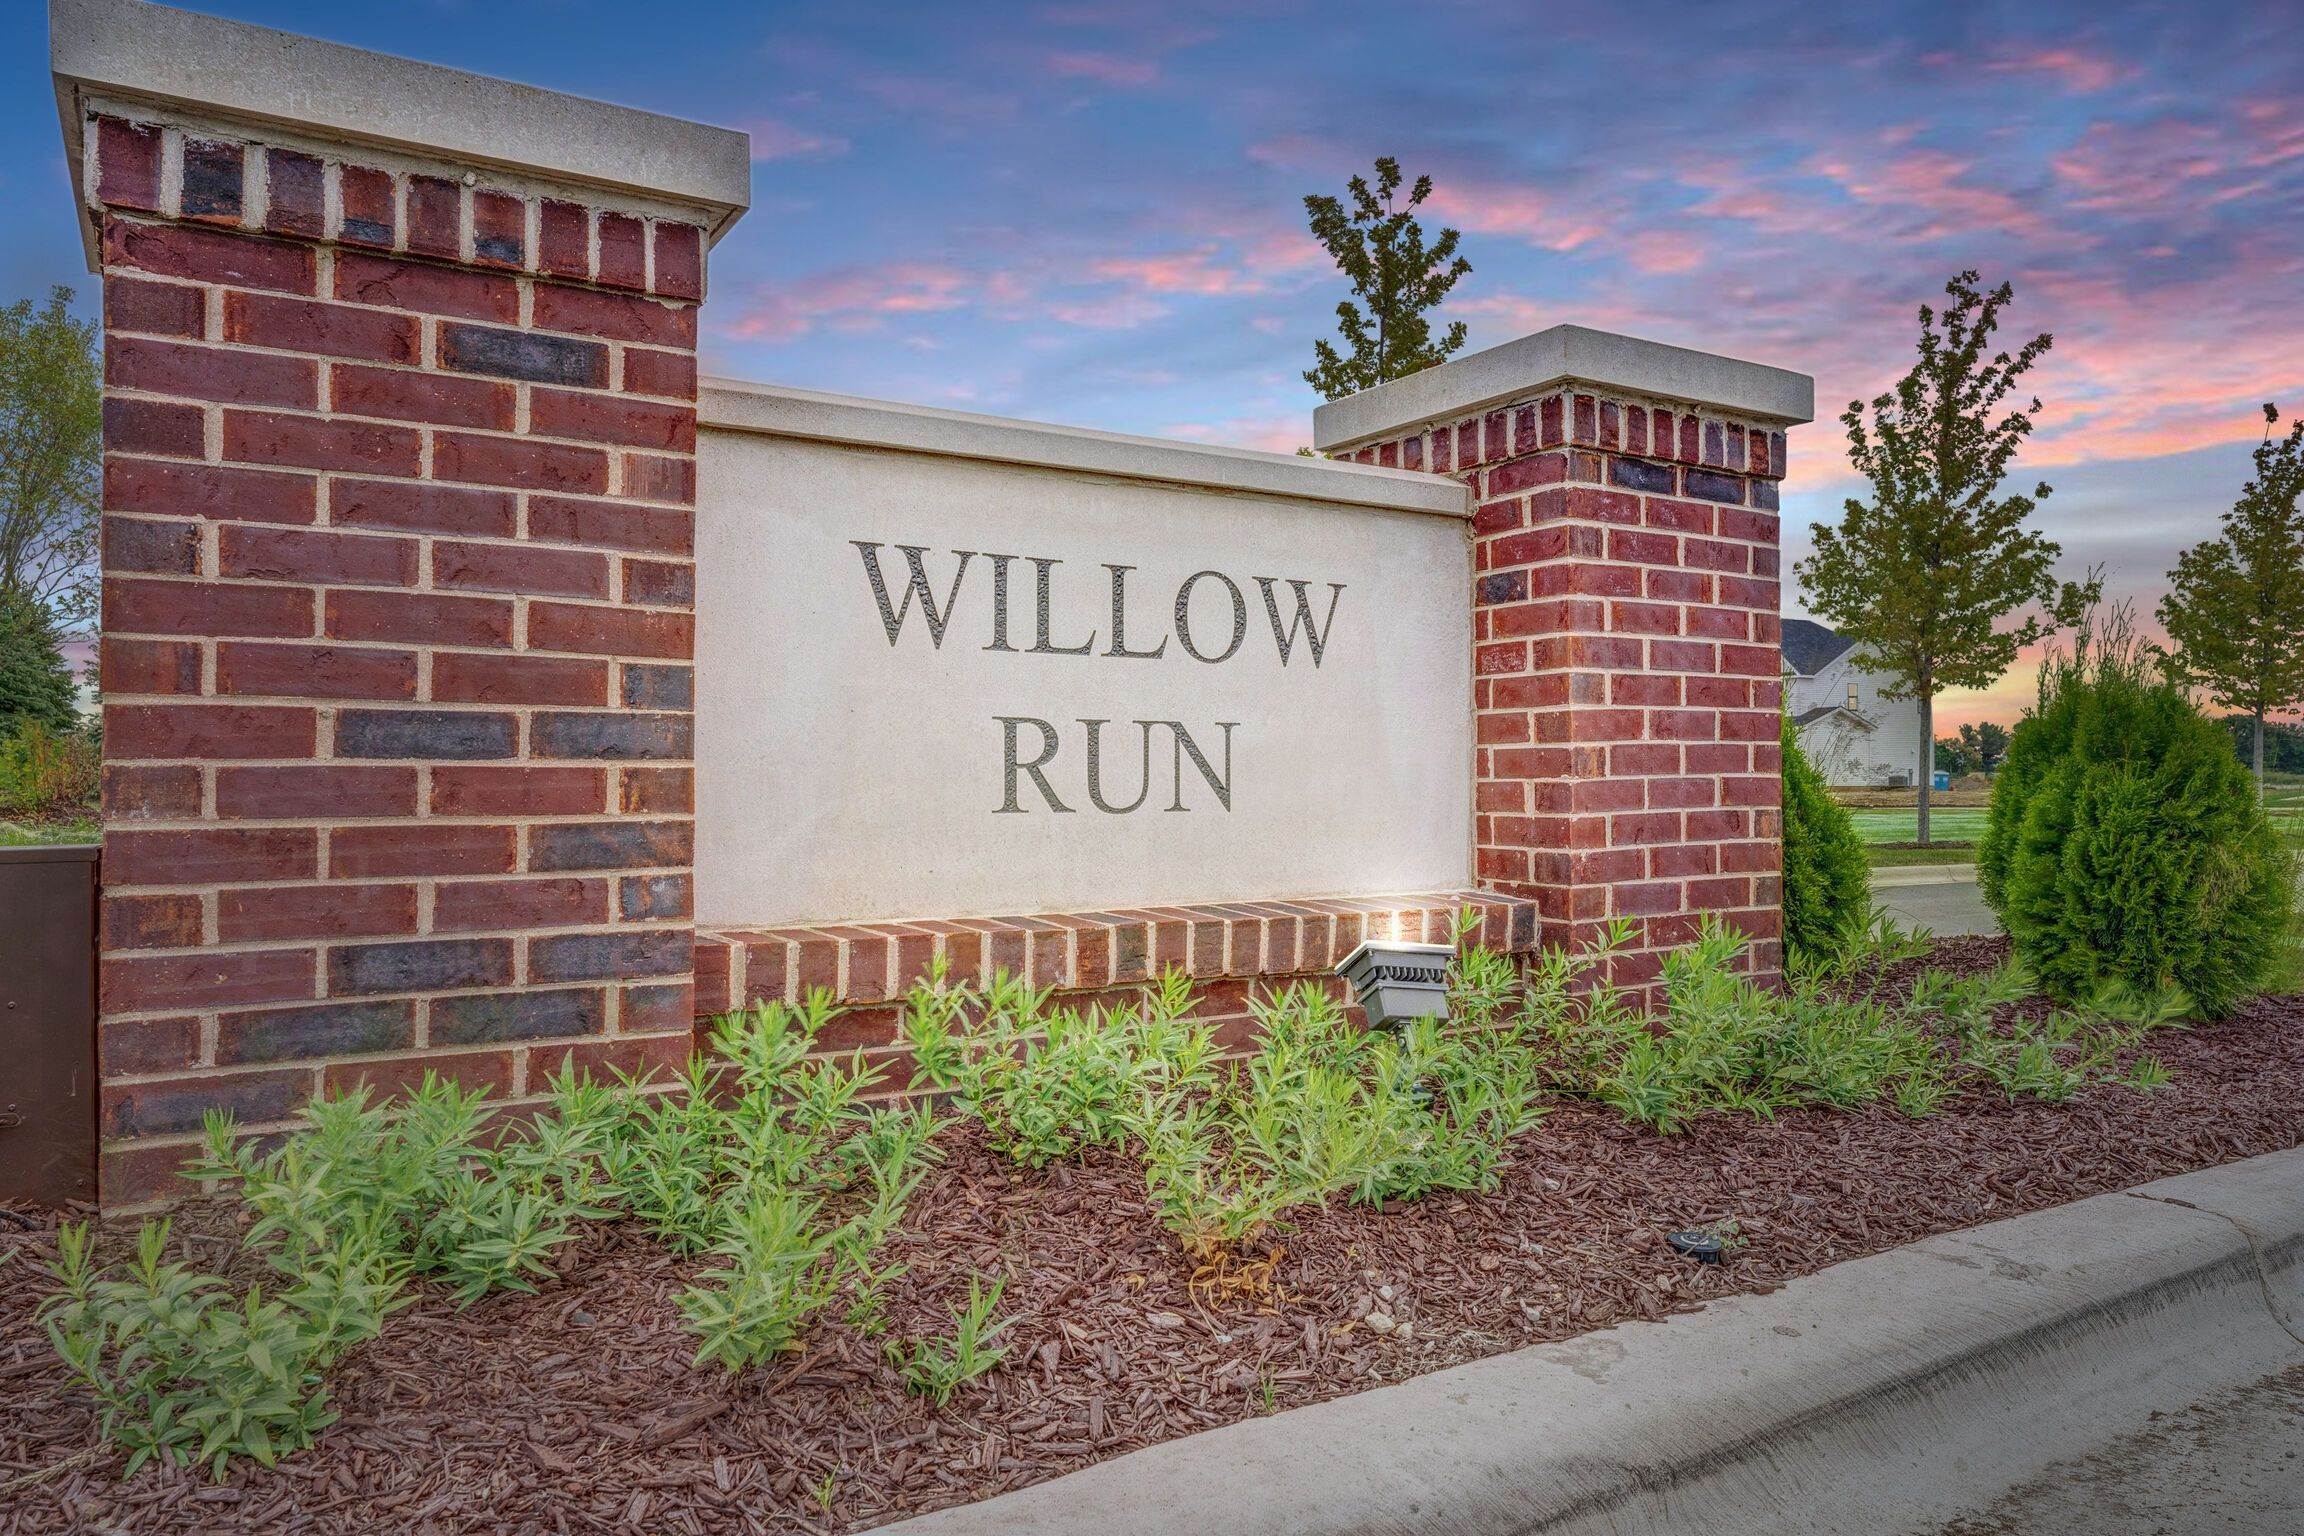 10. Willow Run建于 15262 S. Sawgrass Circle, Plainfield, IL 60544